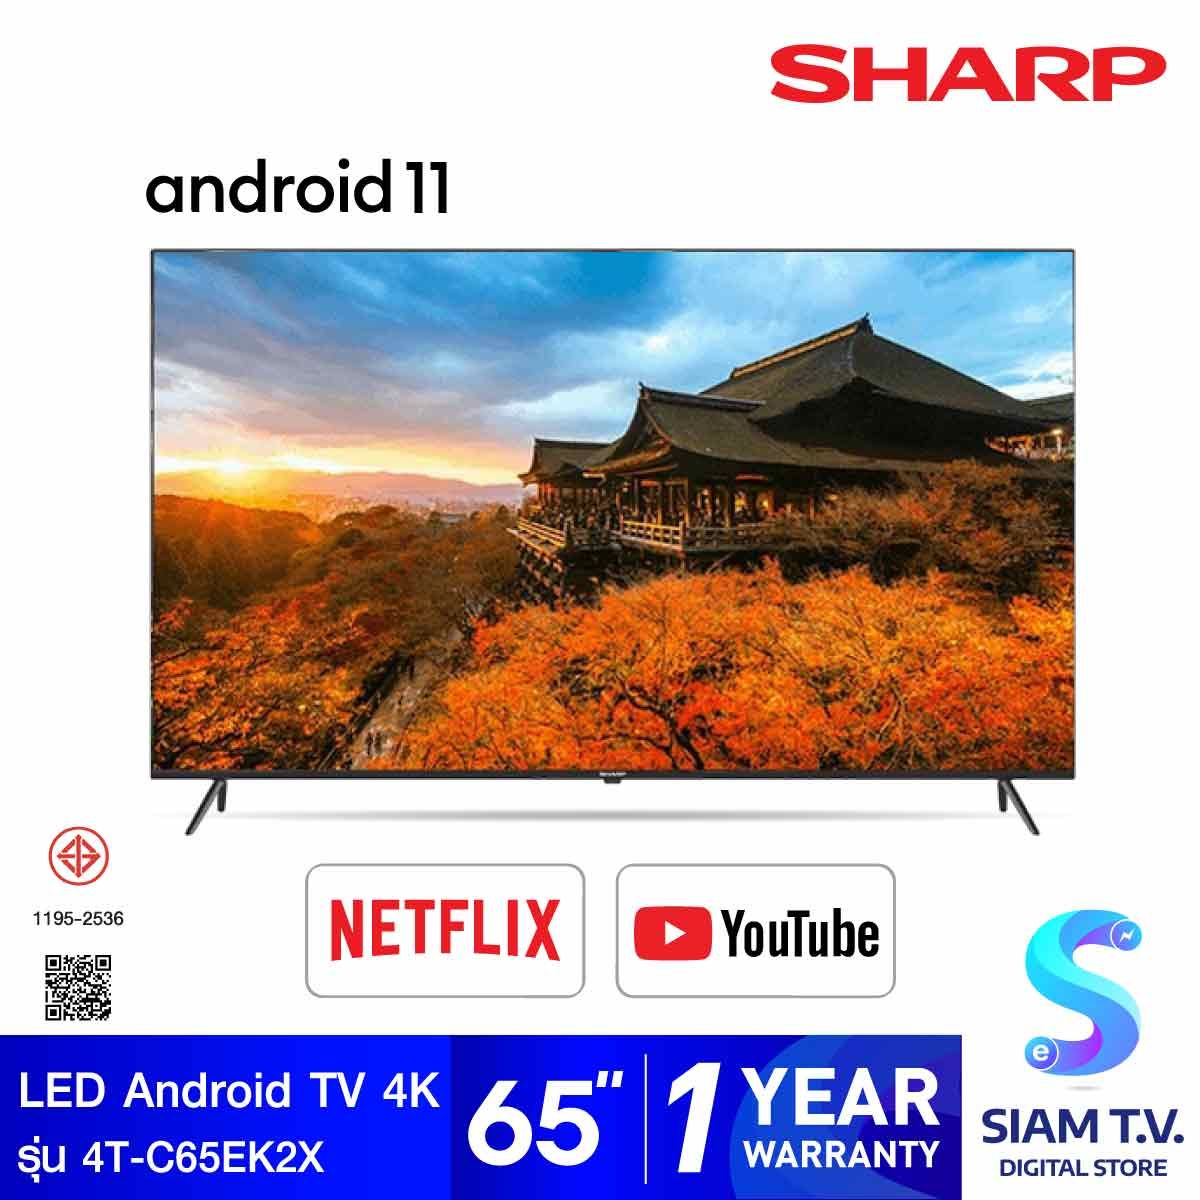 SHARP LED Android TV 4K รุ่น 4T-C65EK2X  Android11 TV สมาร์ททีวีขนาด 65 นิ้ว